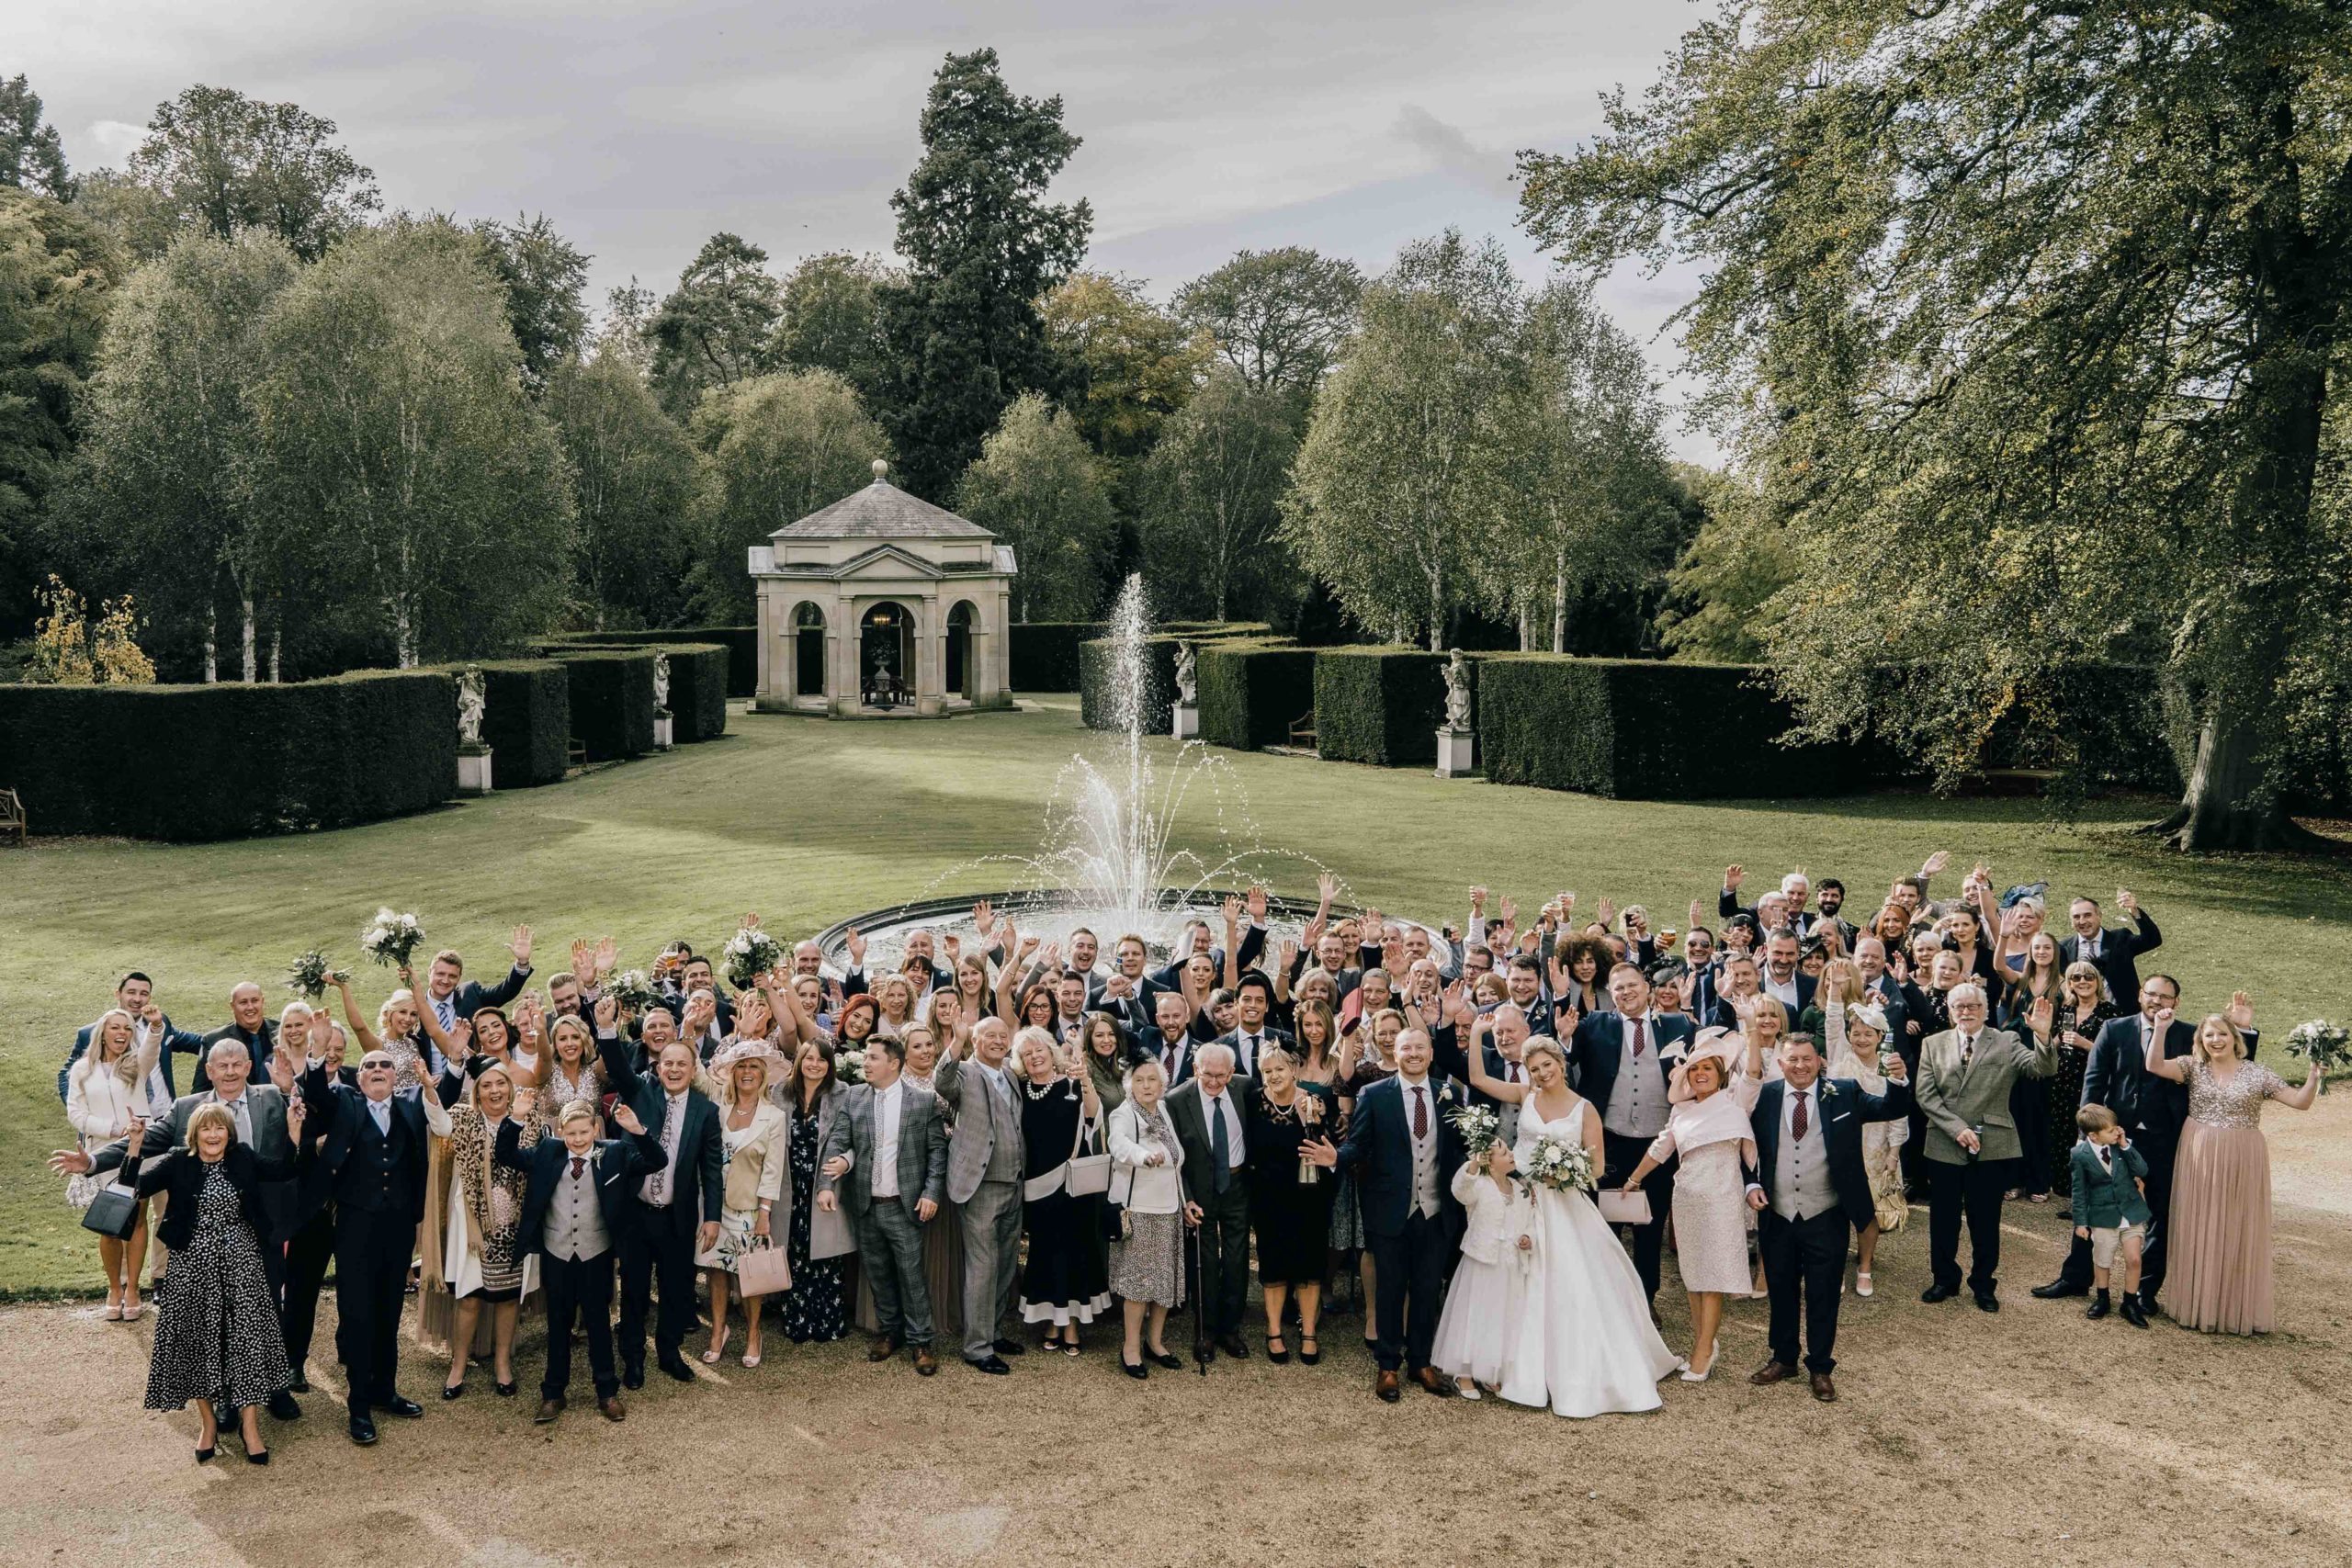 Group wedding photo at The Orangery, Settrington, North Yorkshire